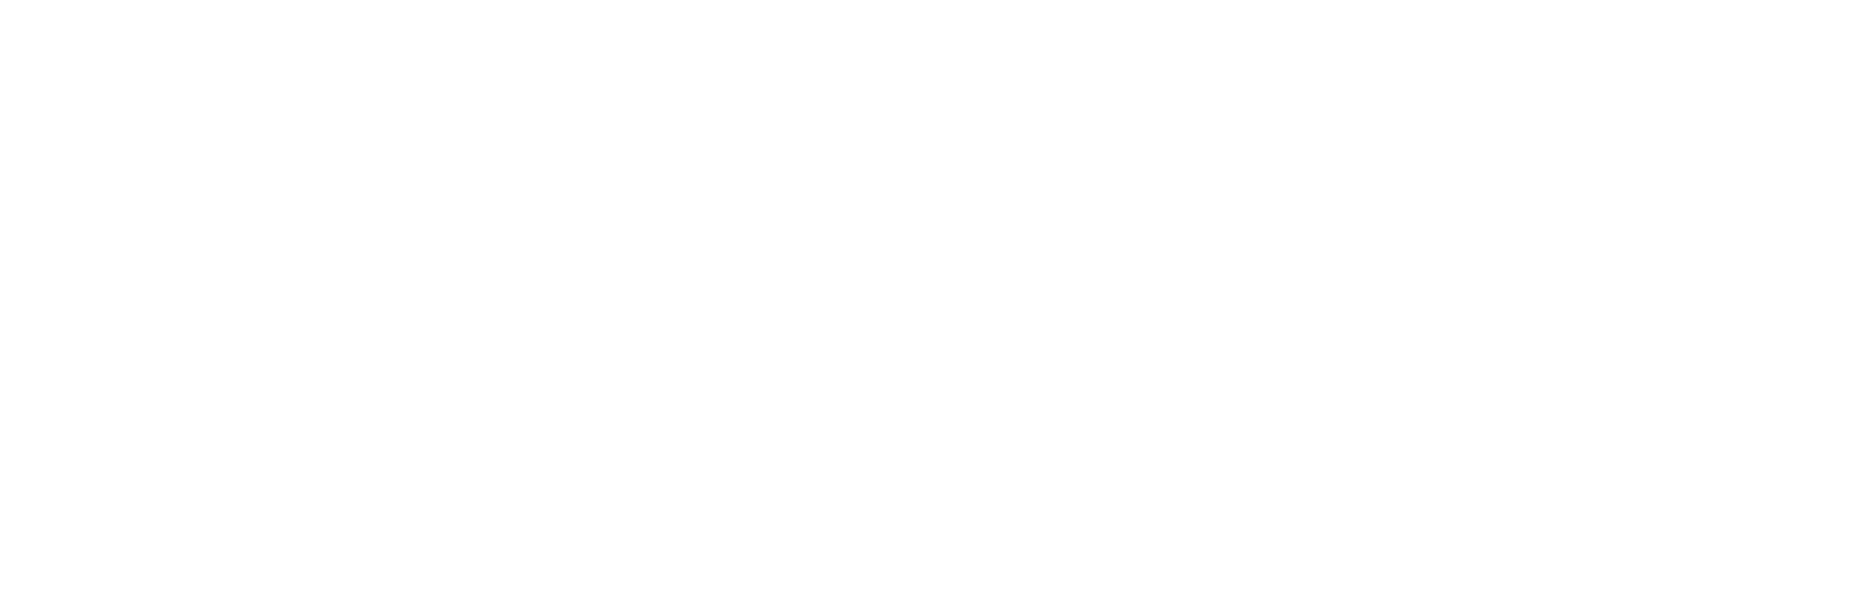 SnapOrder Light Offerta